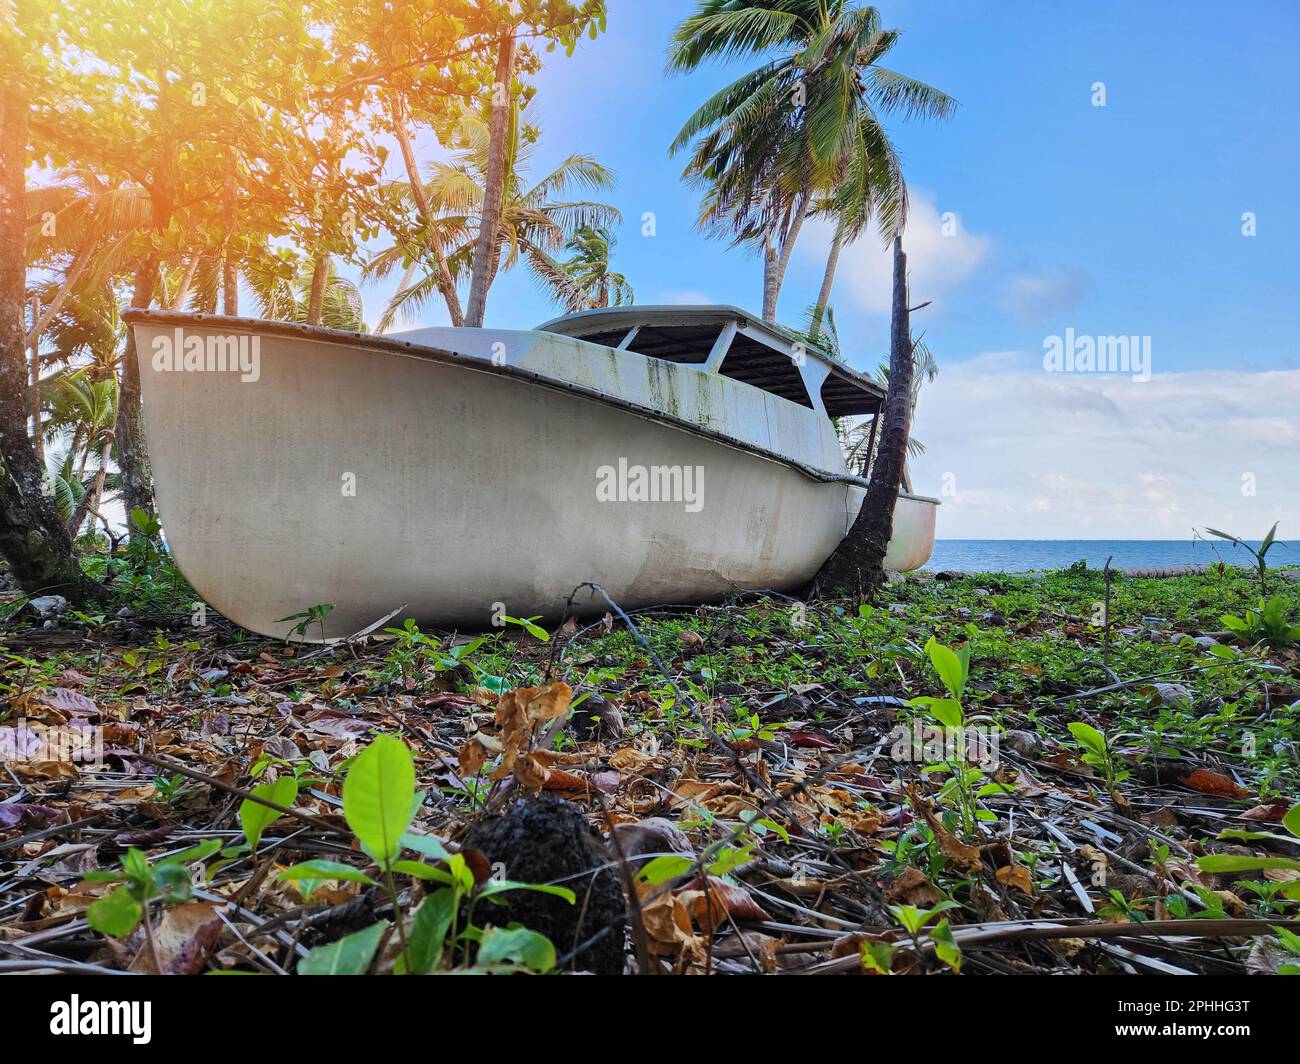 Damaged ship stuck on beach on blue sea and sky background Stock Photo